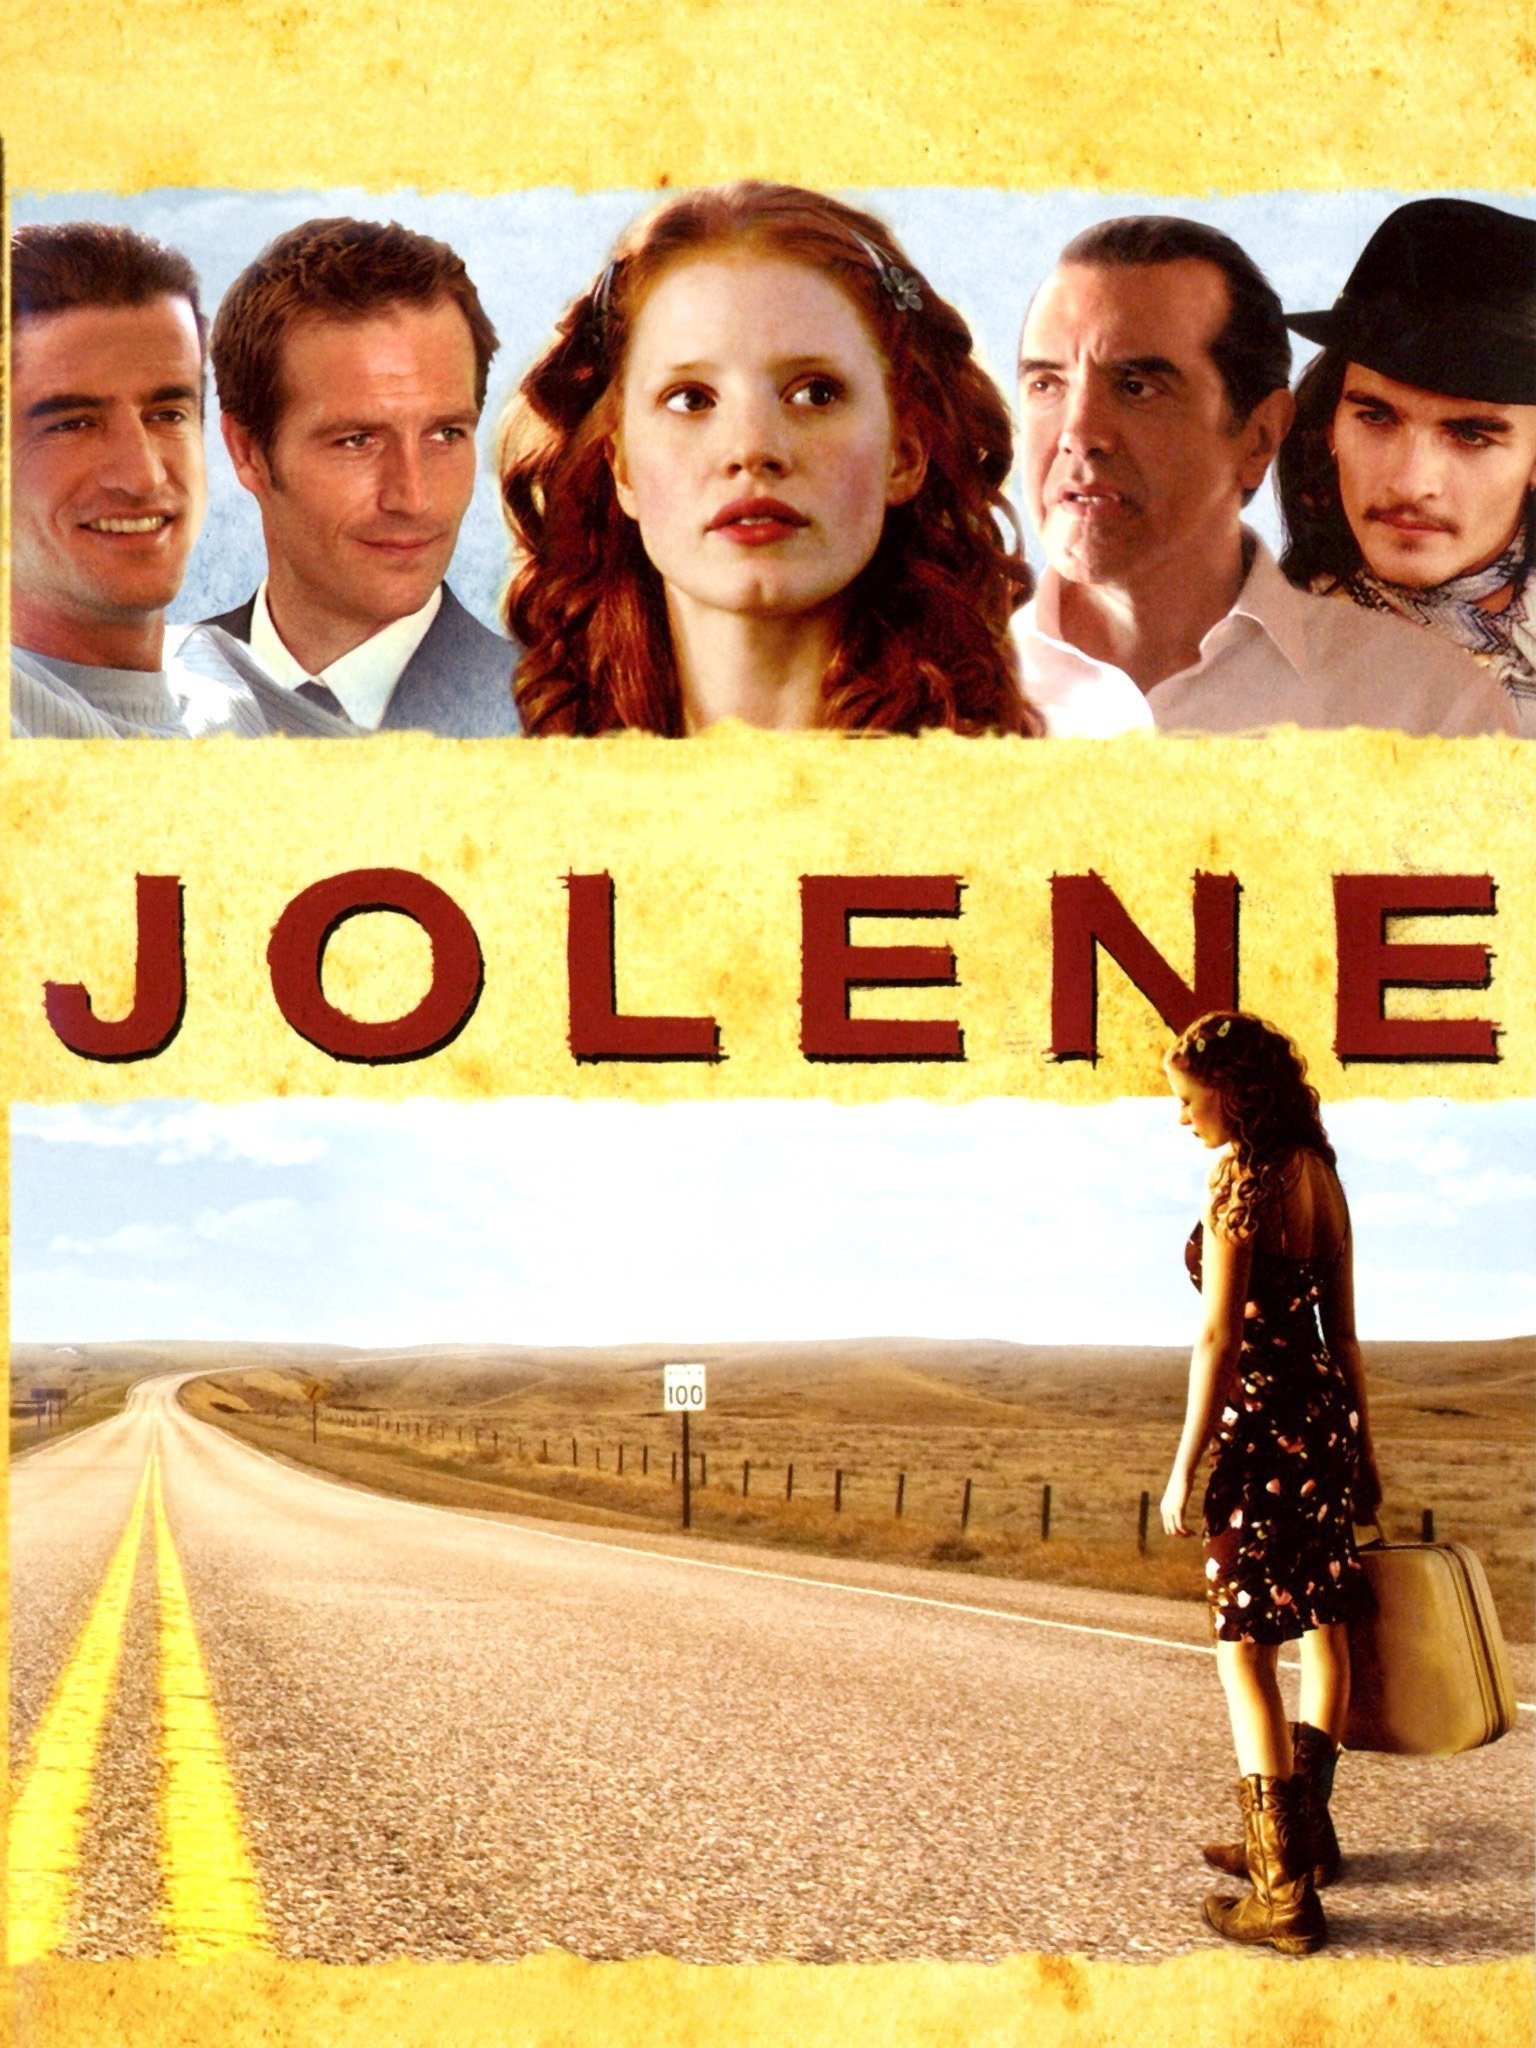 Pictures of jolene